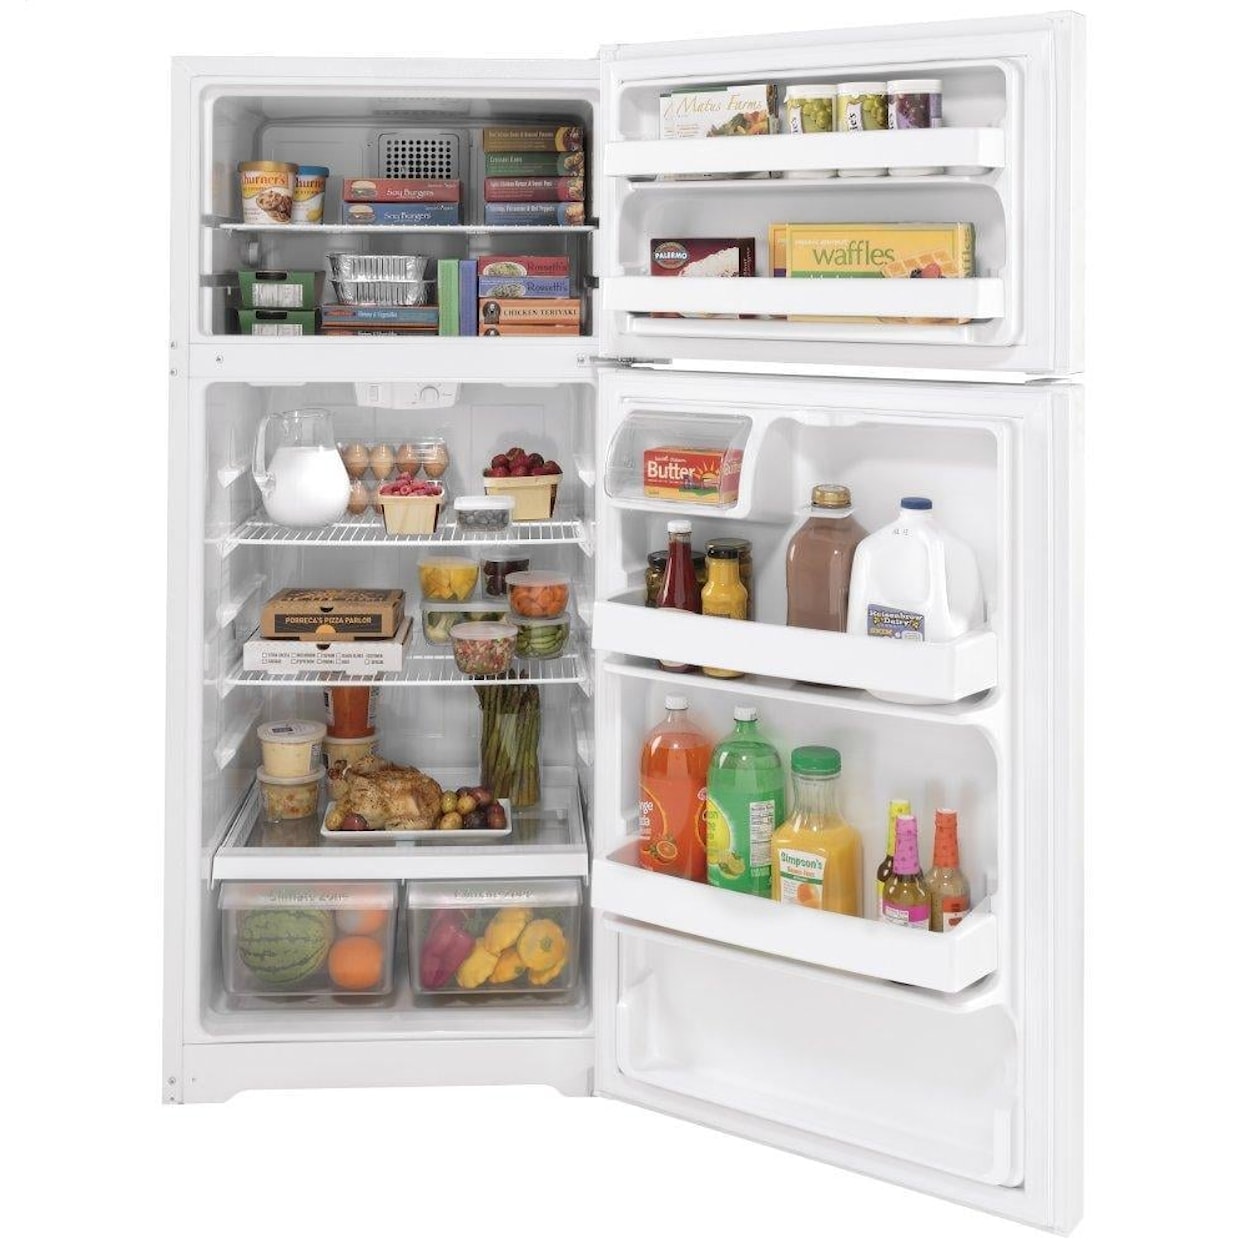 GE Appliances Refrigerators Refrigerator